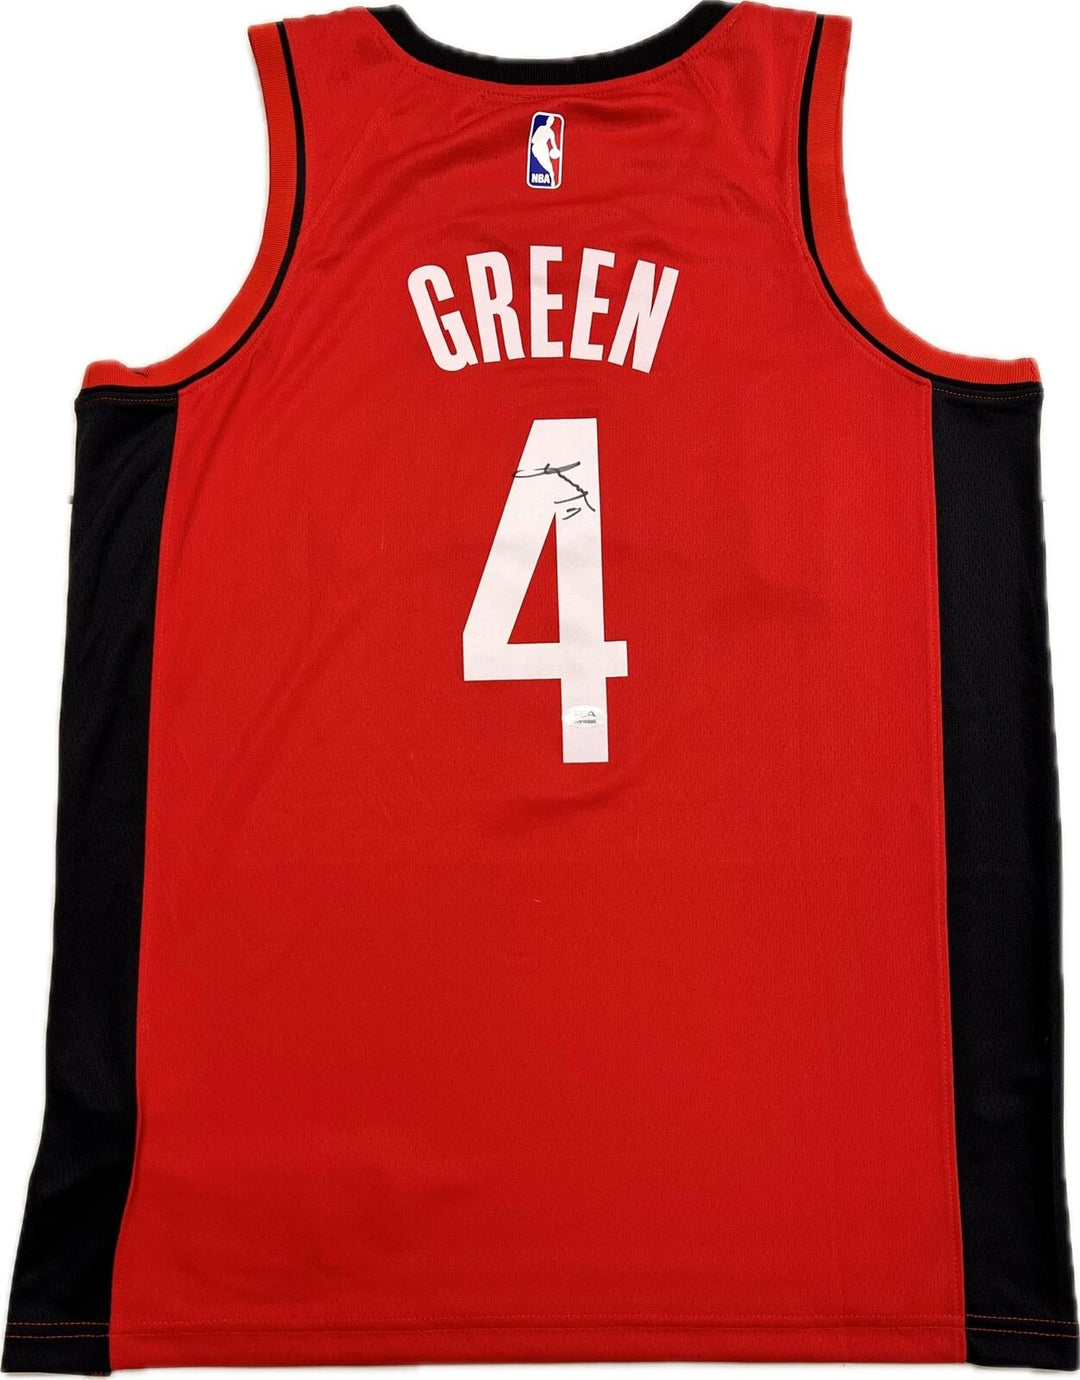 Jalen Green signed jersey PSA/DNA Houston Rockets Autographed Image 1